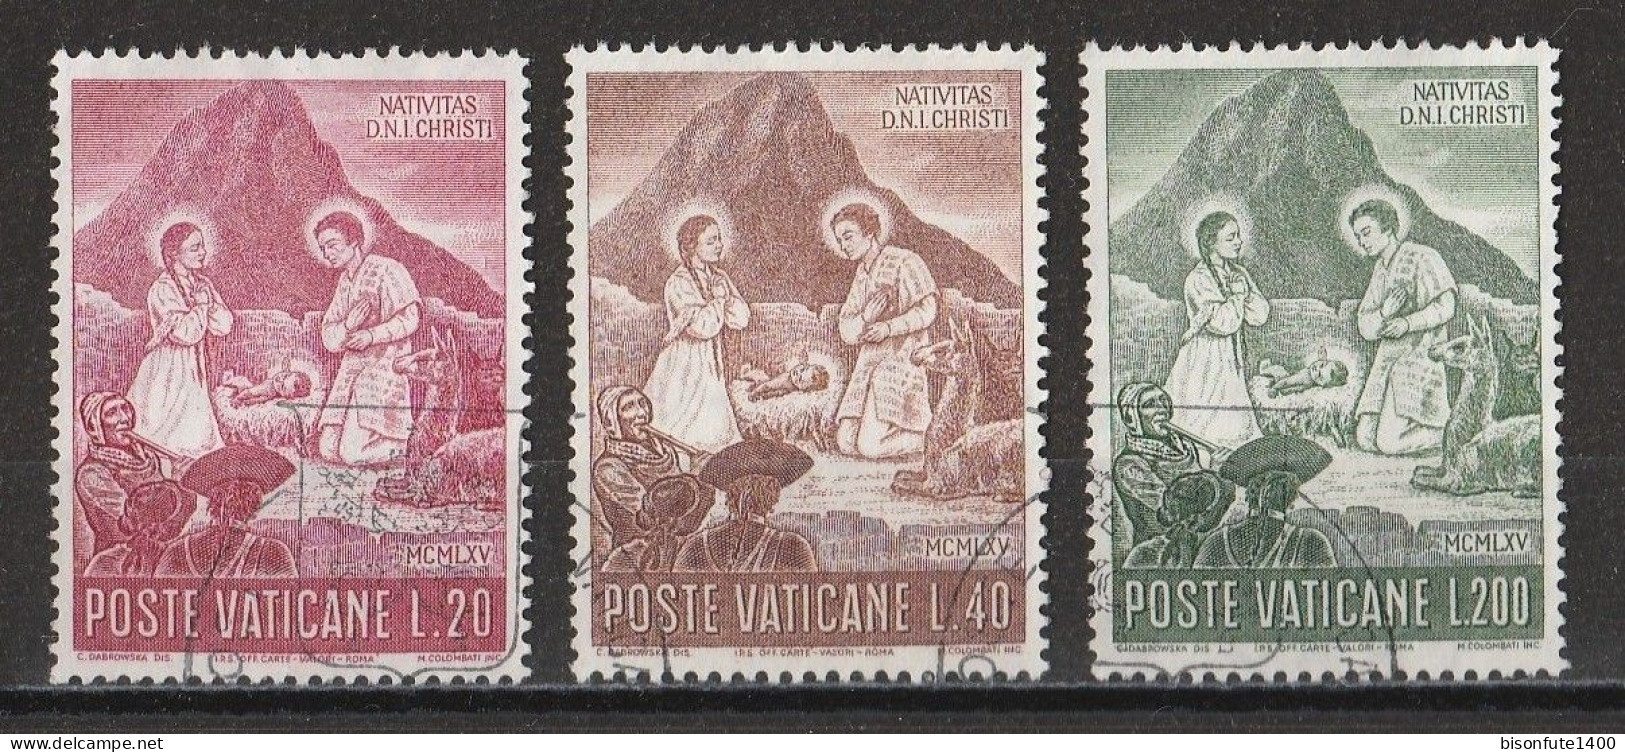 Vatican 1965 : Timbres Yvert & Tellier N° 432 - 433 - 434 - 435 - 436 - 437 - 438 - 439 Et 440 Oblitérés. - Gebraucht